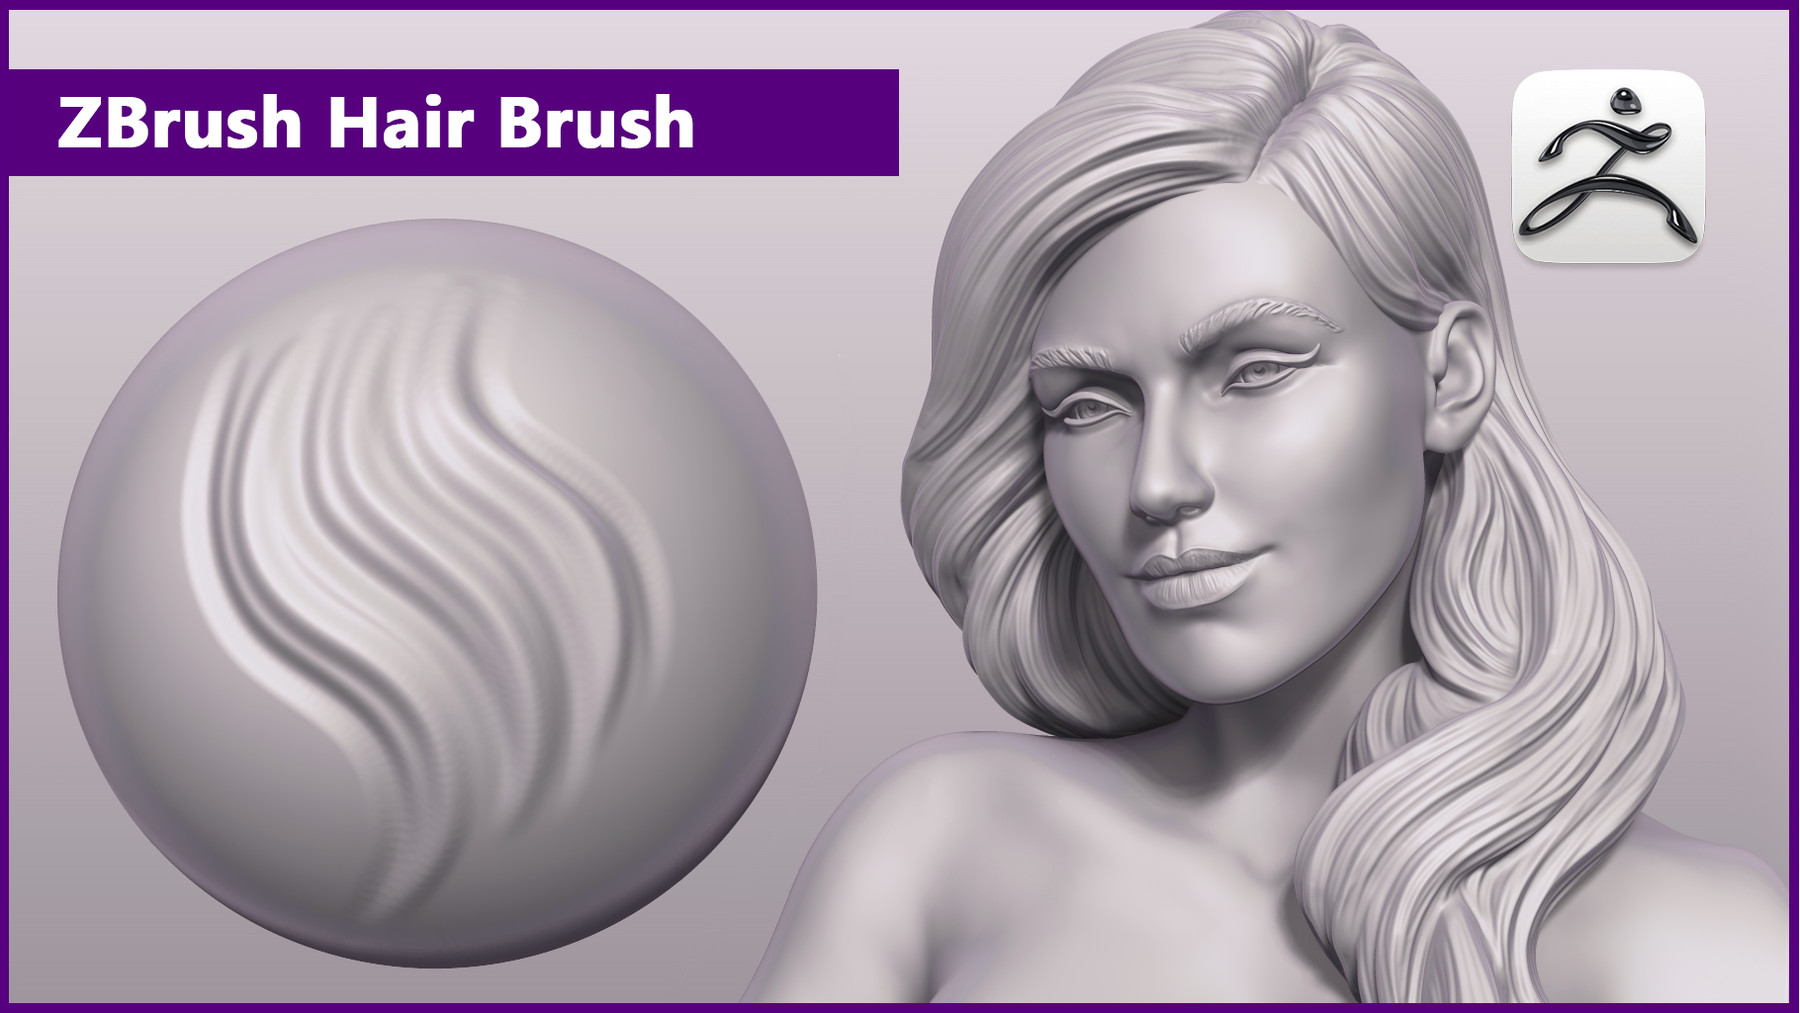 hair brushes for zbrush 4r7